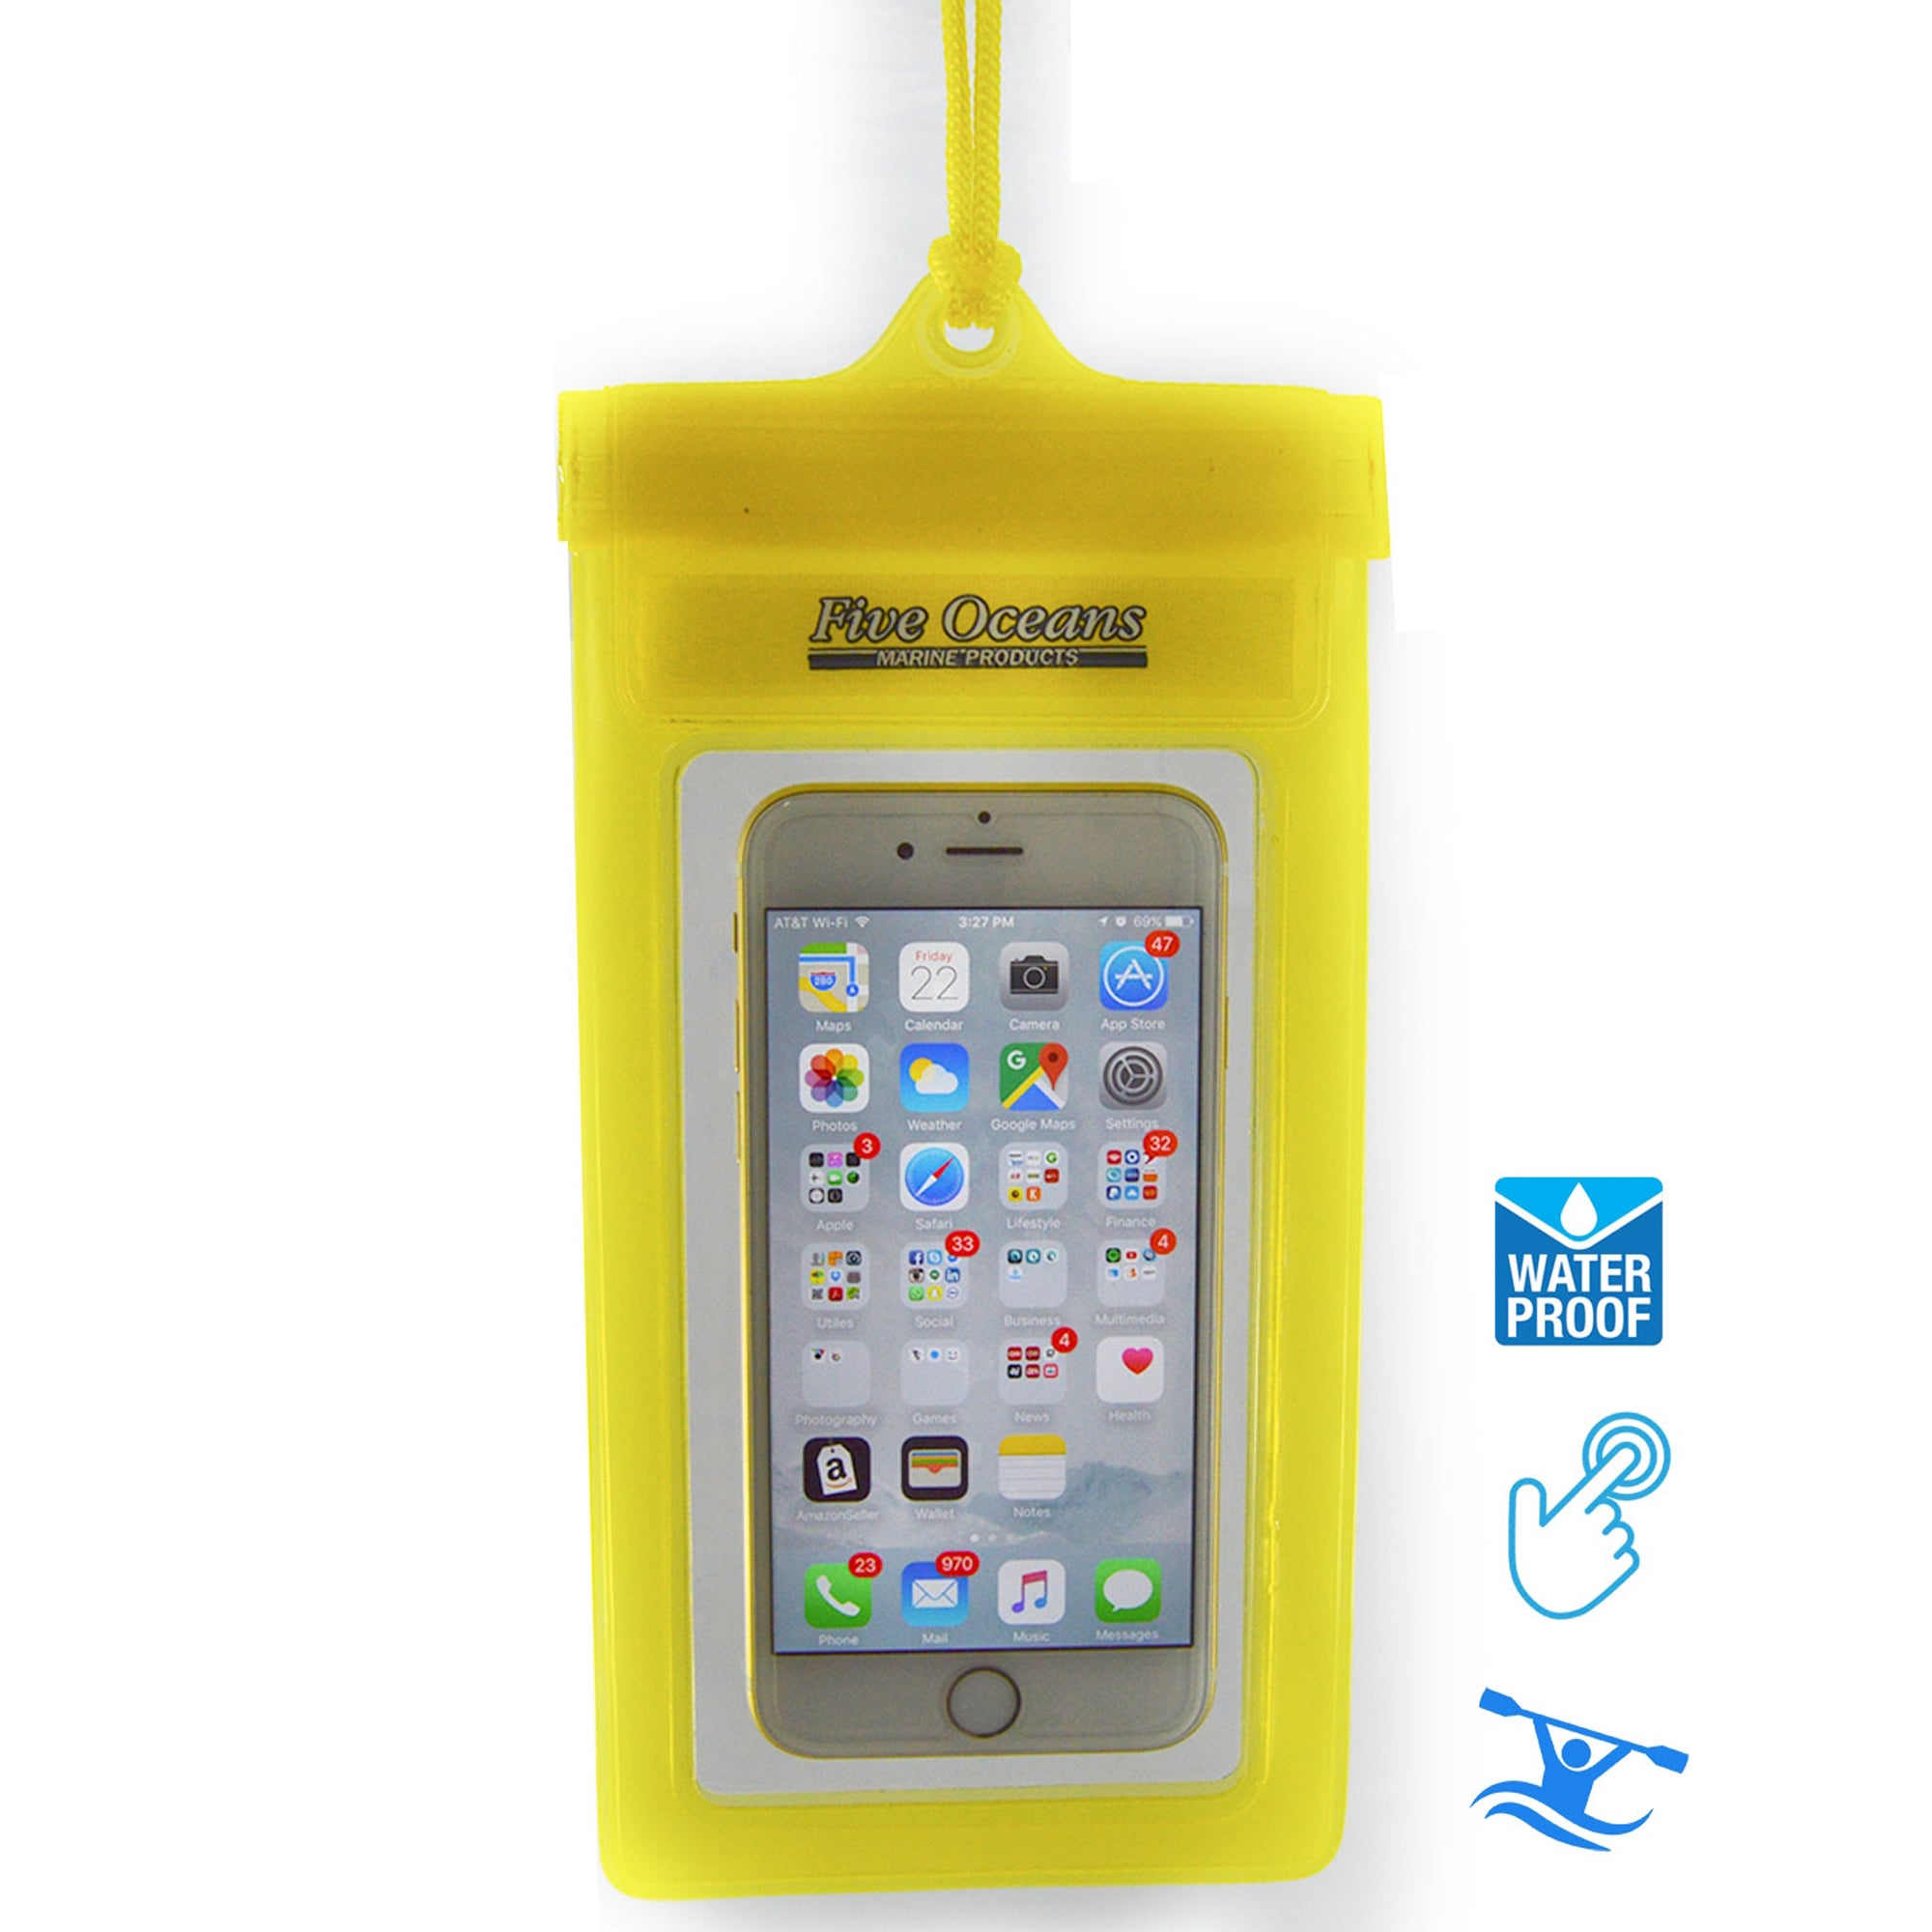 Waterproof Phone Case, Yellow - FO3827